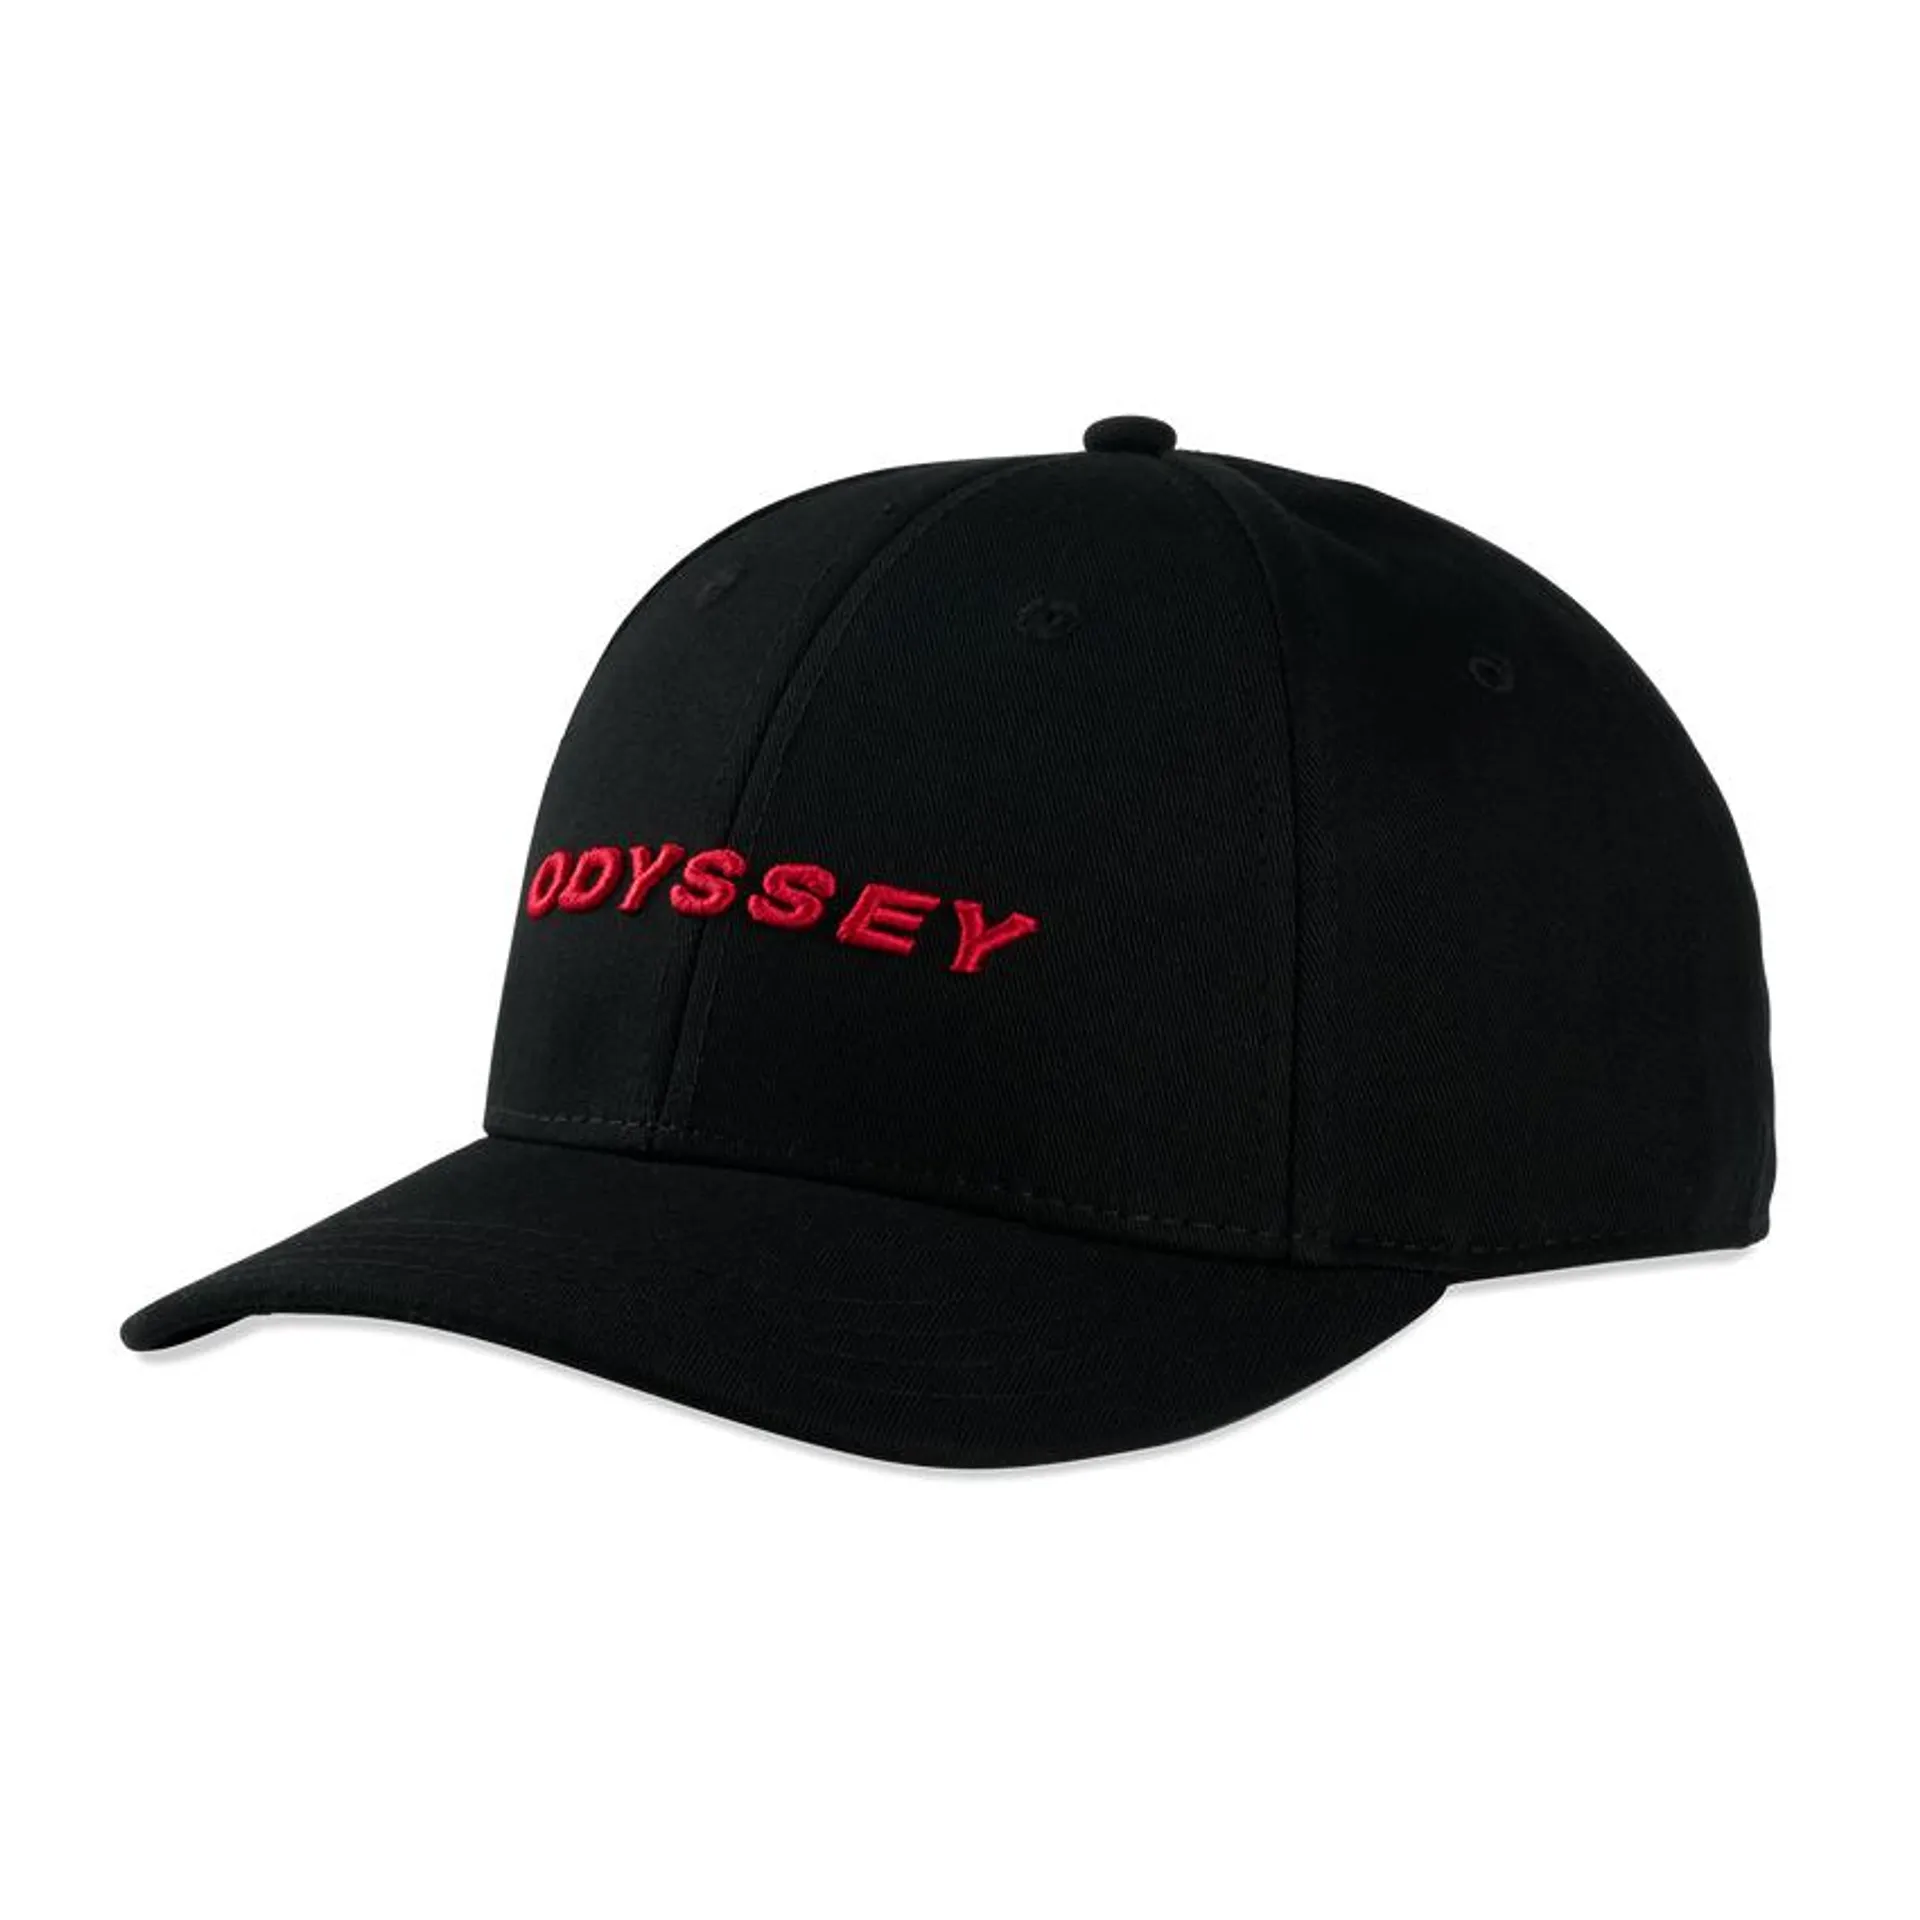 Odyssey Type Adjustable Hat